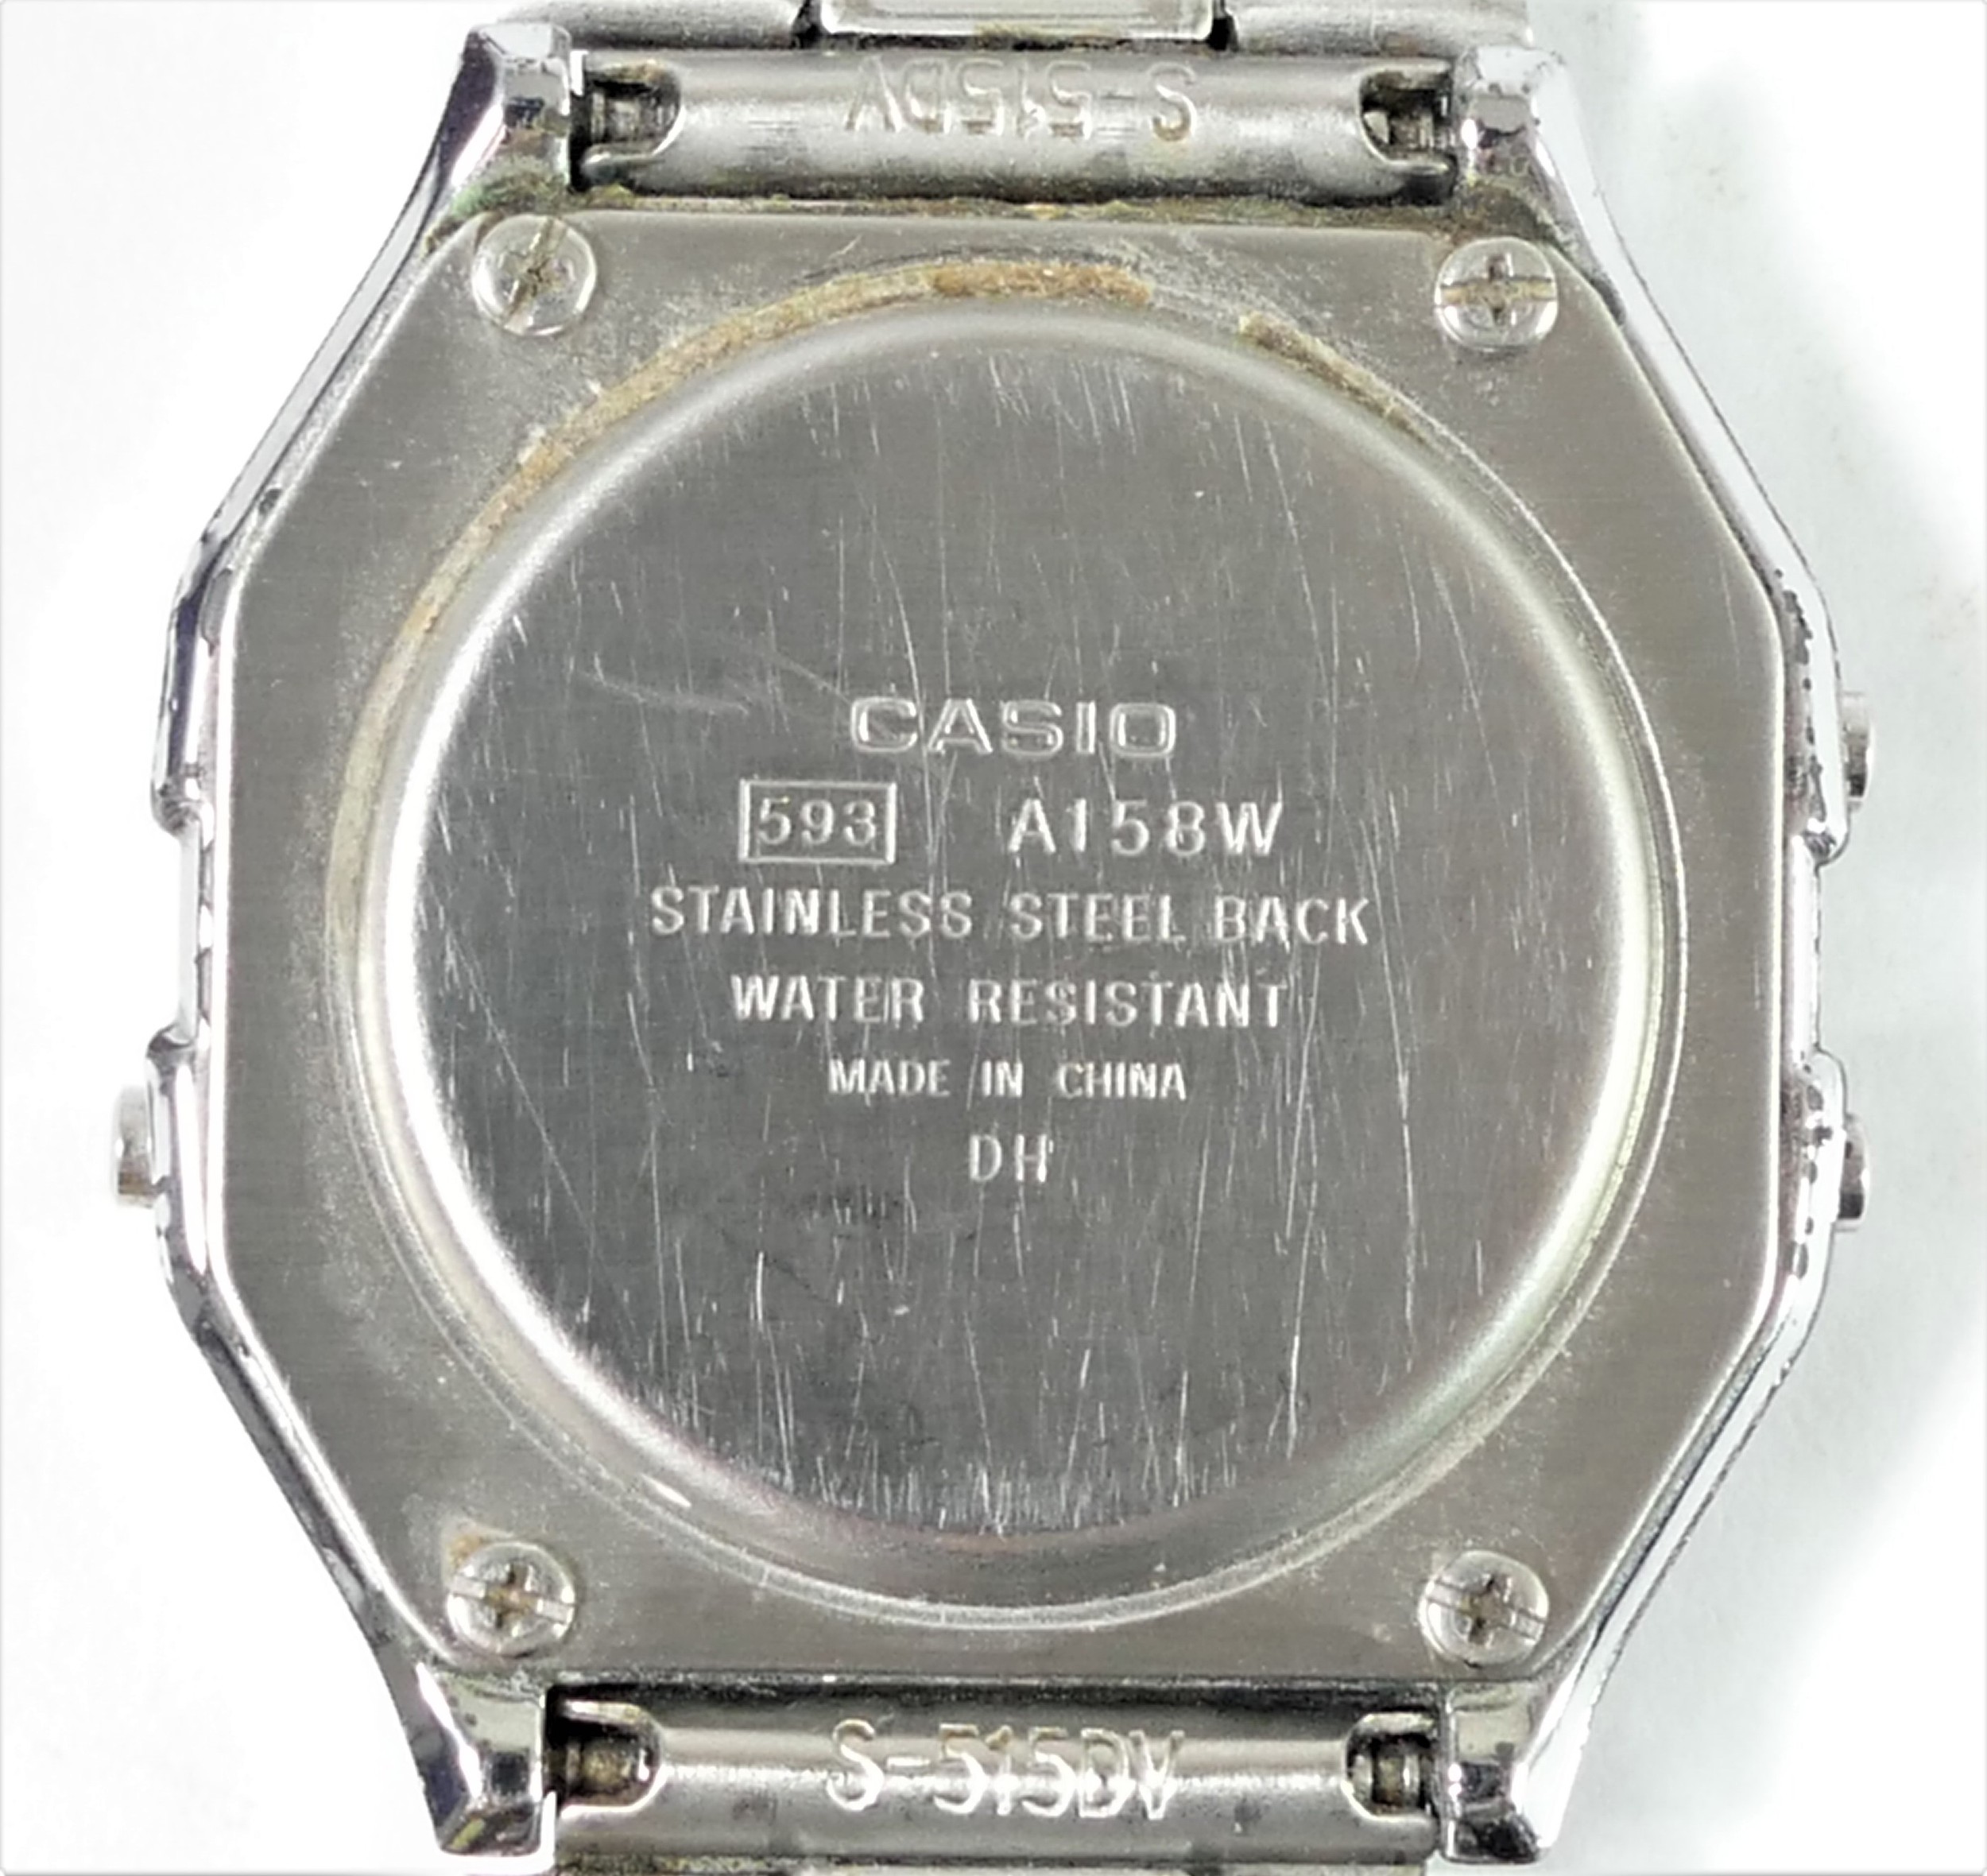 Casio Alarm Chrono, a gentleman's stainless steel digital wristwatch, ref 593, A158W, original - Image 4 of 7